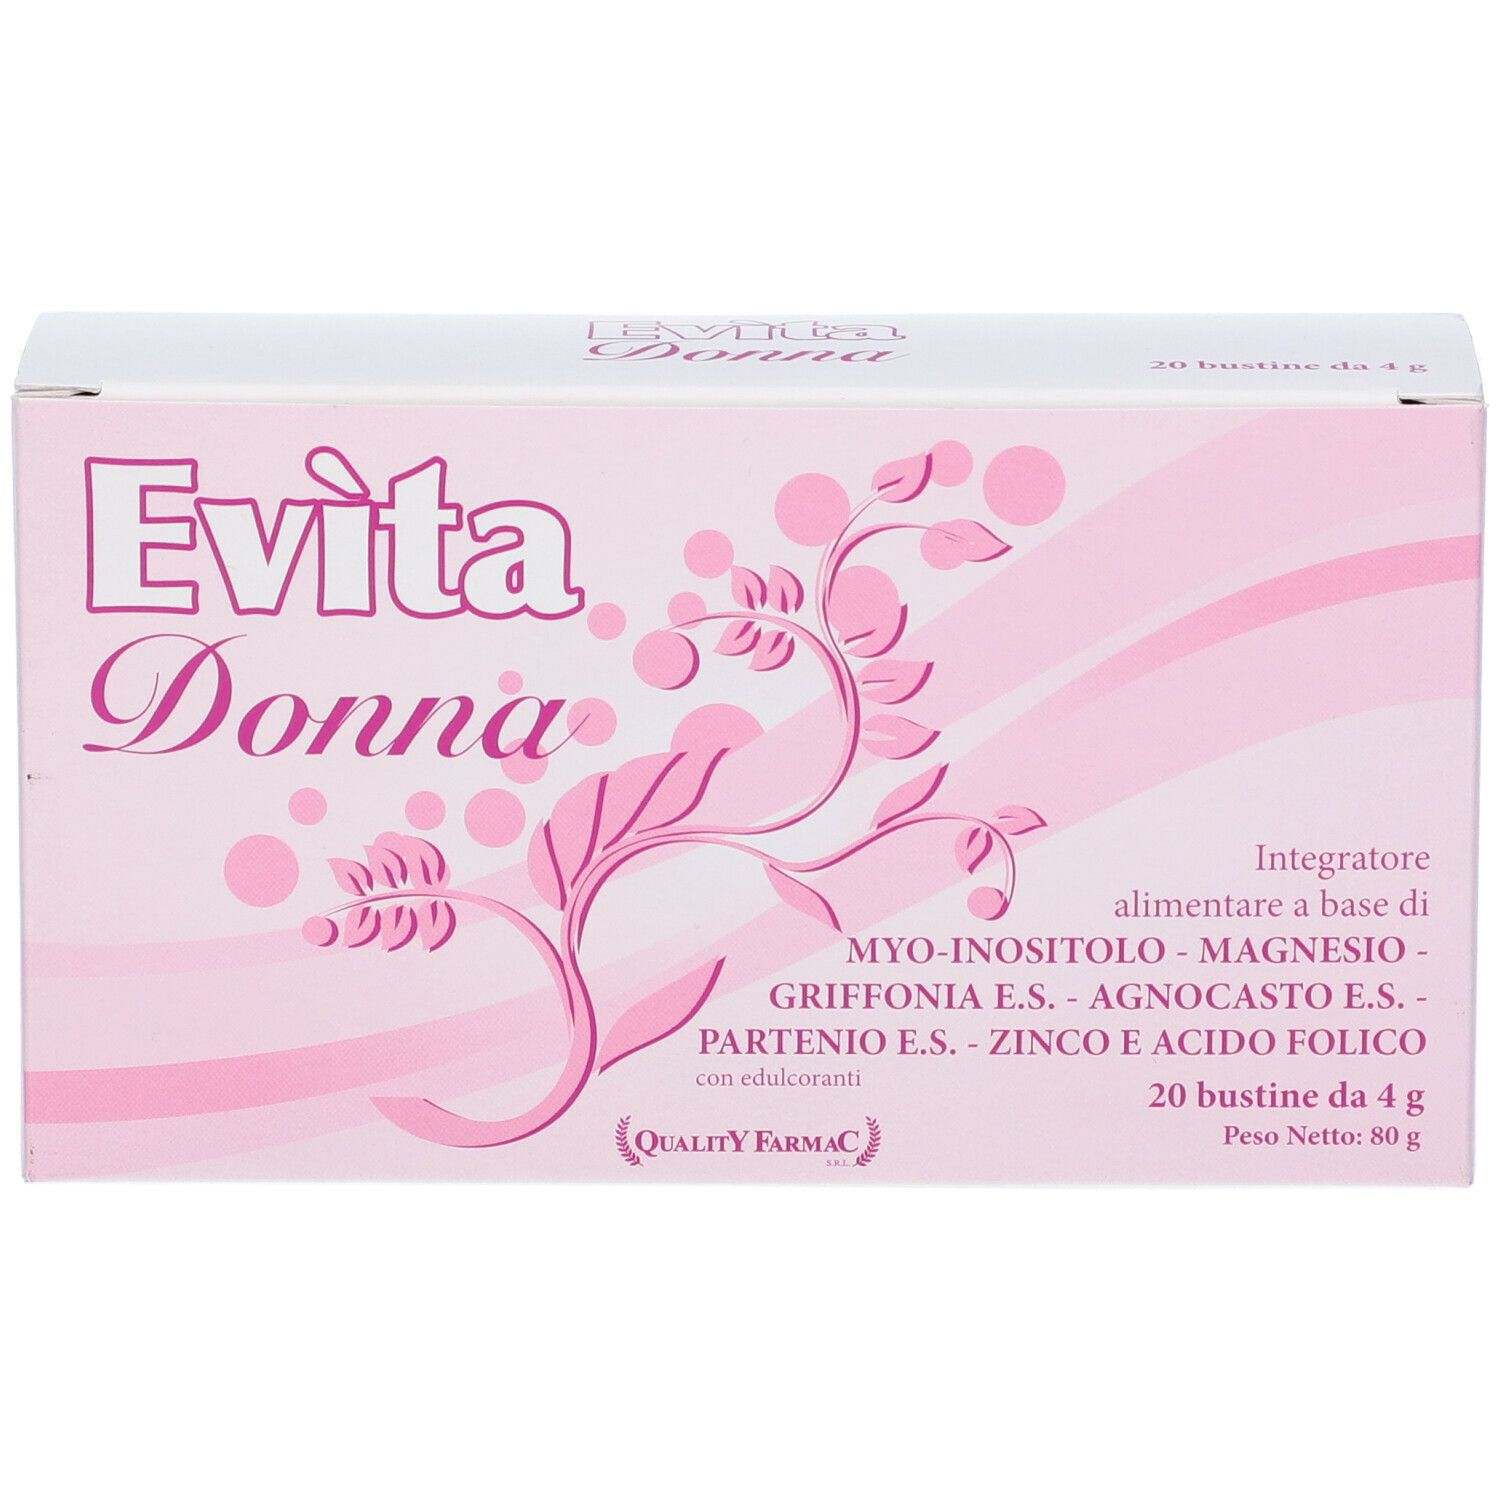 Evita Donna 20Bust